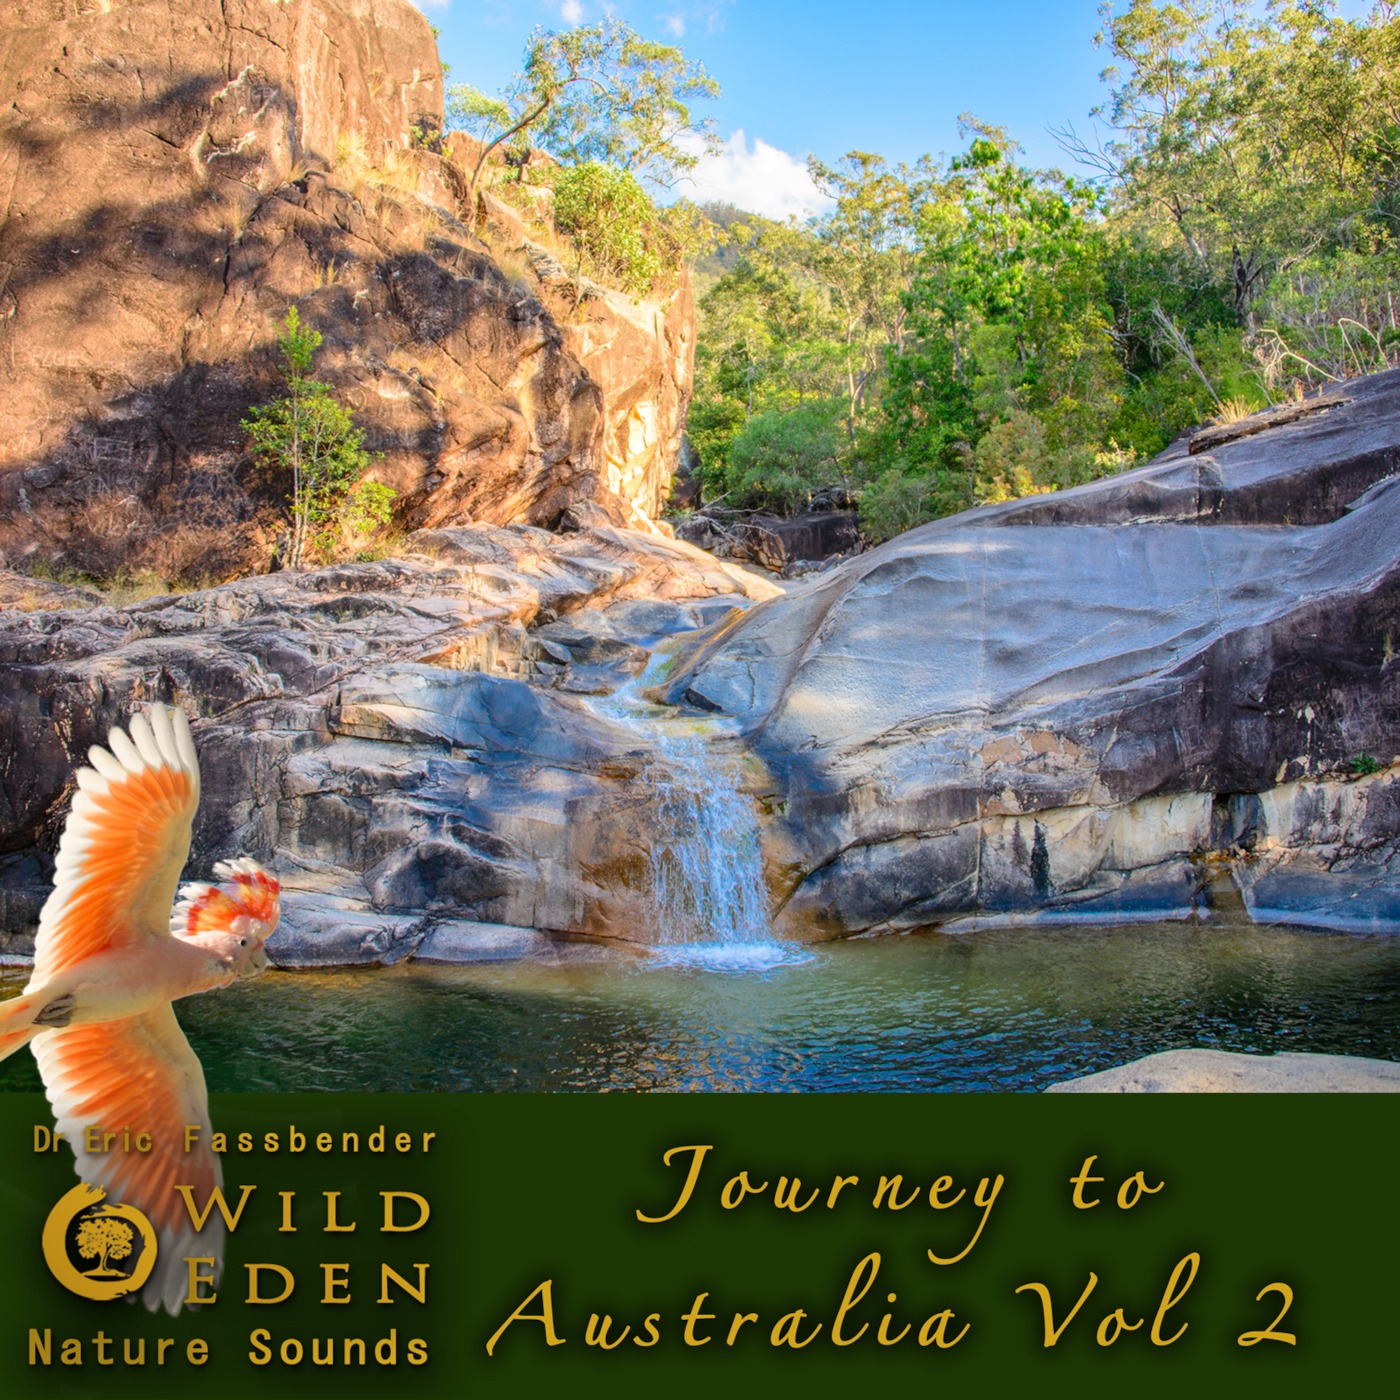 Episode 18 - Early Morning Songbirds - Album Journey to Australia - Vol.2